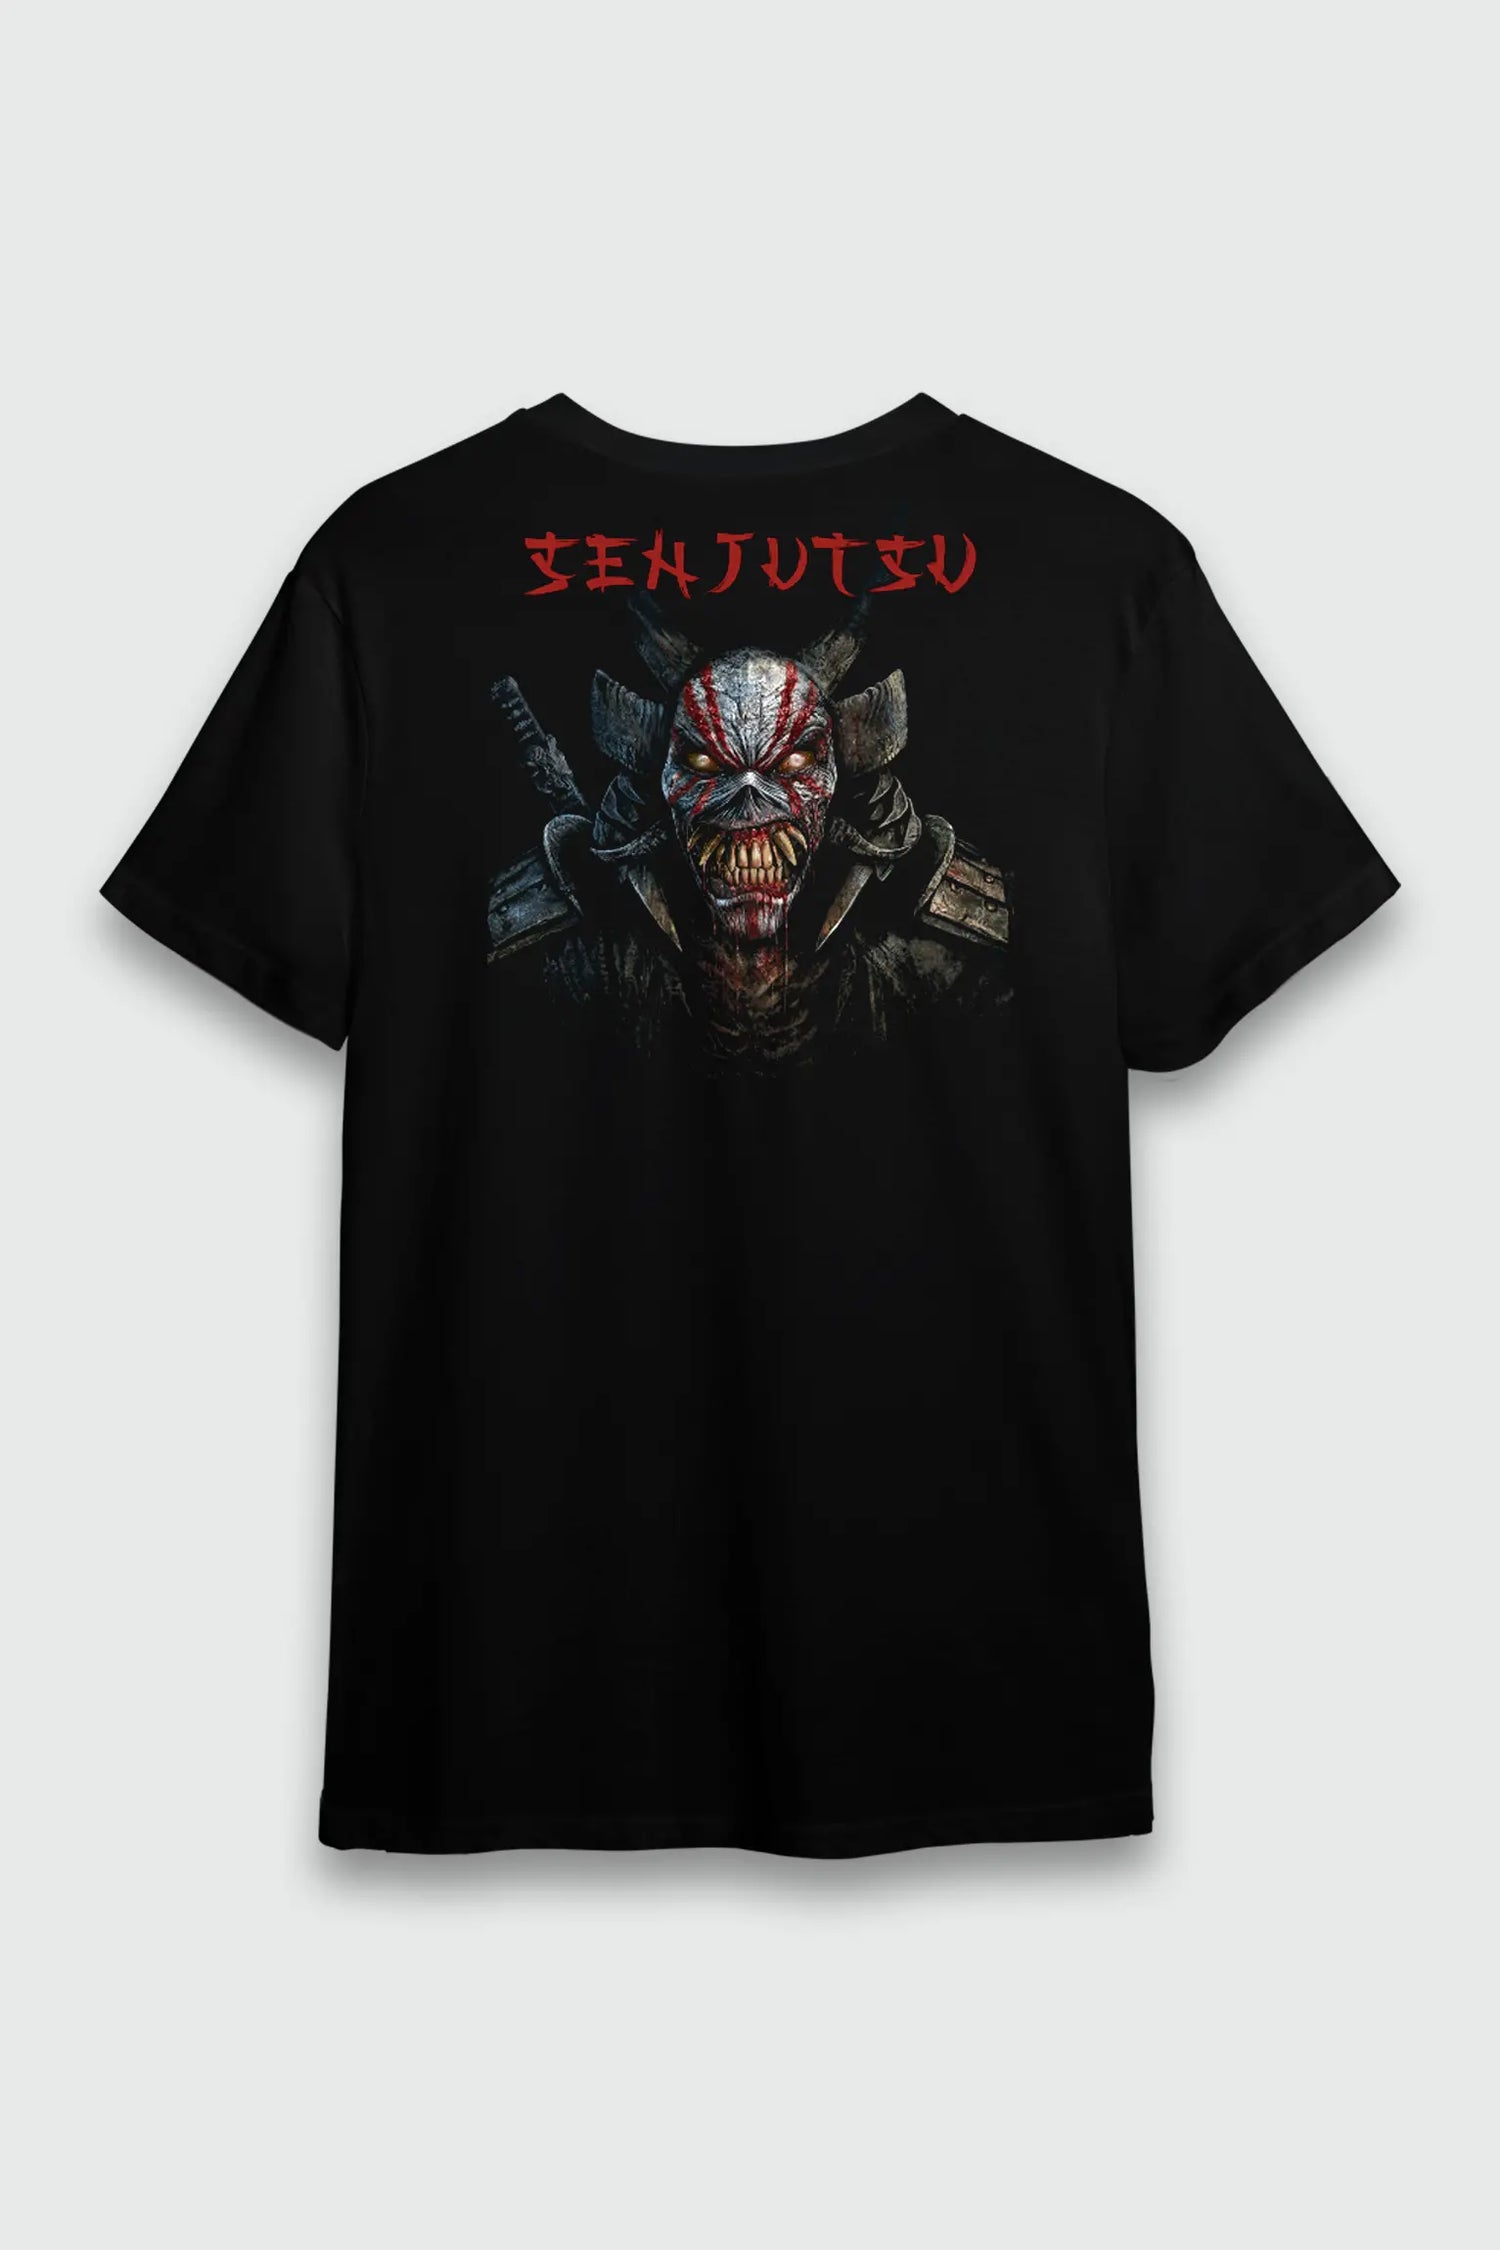 Camiseta Iron Maiden Senjutsu 1